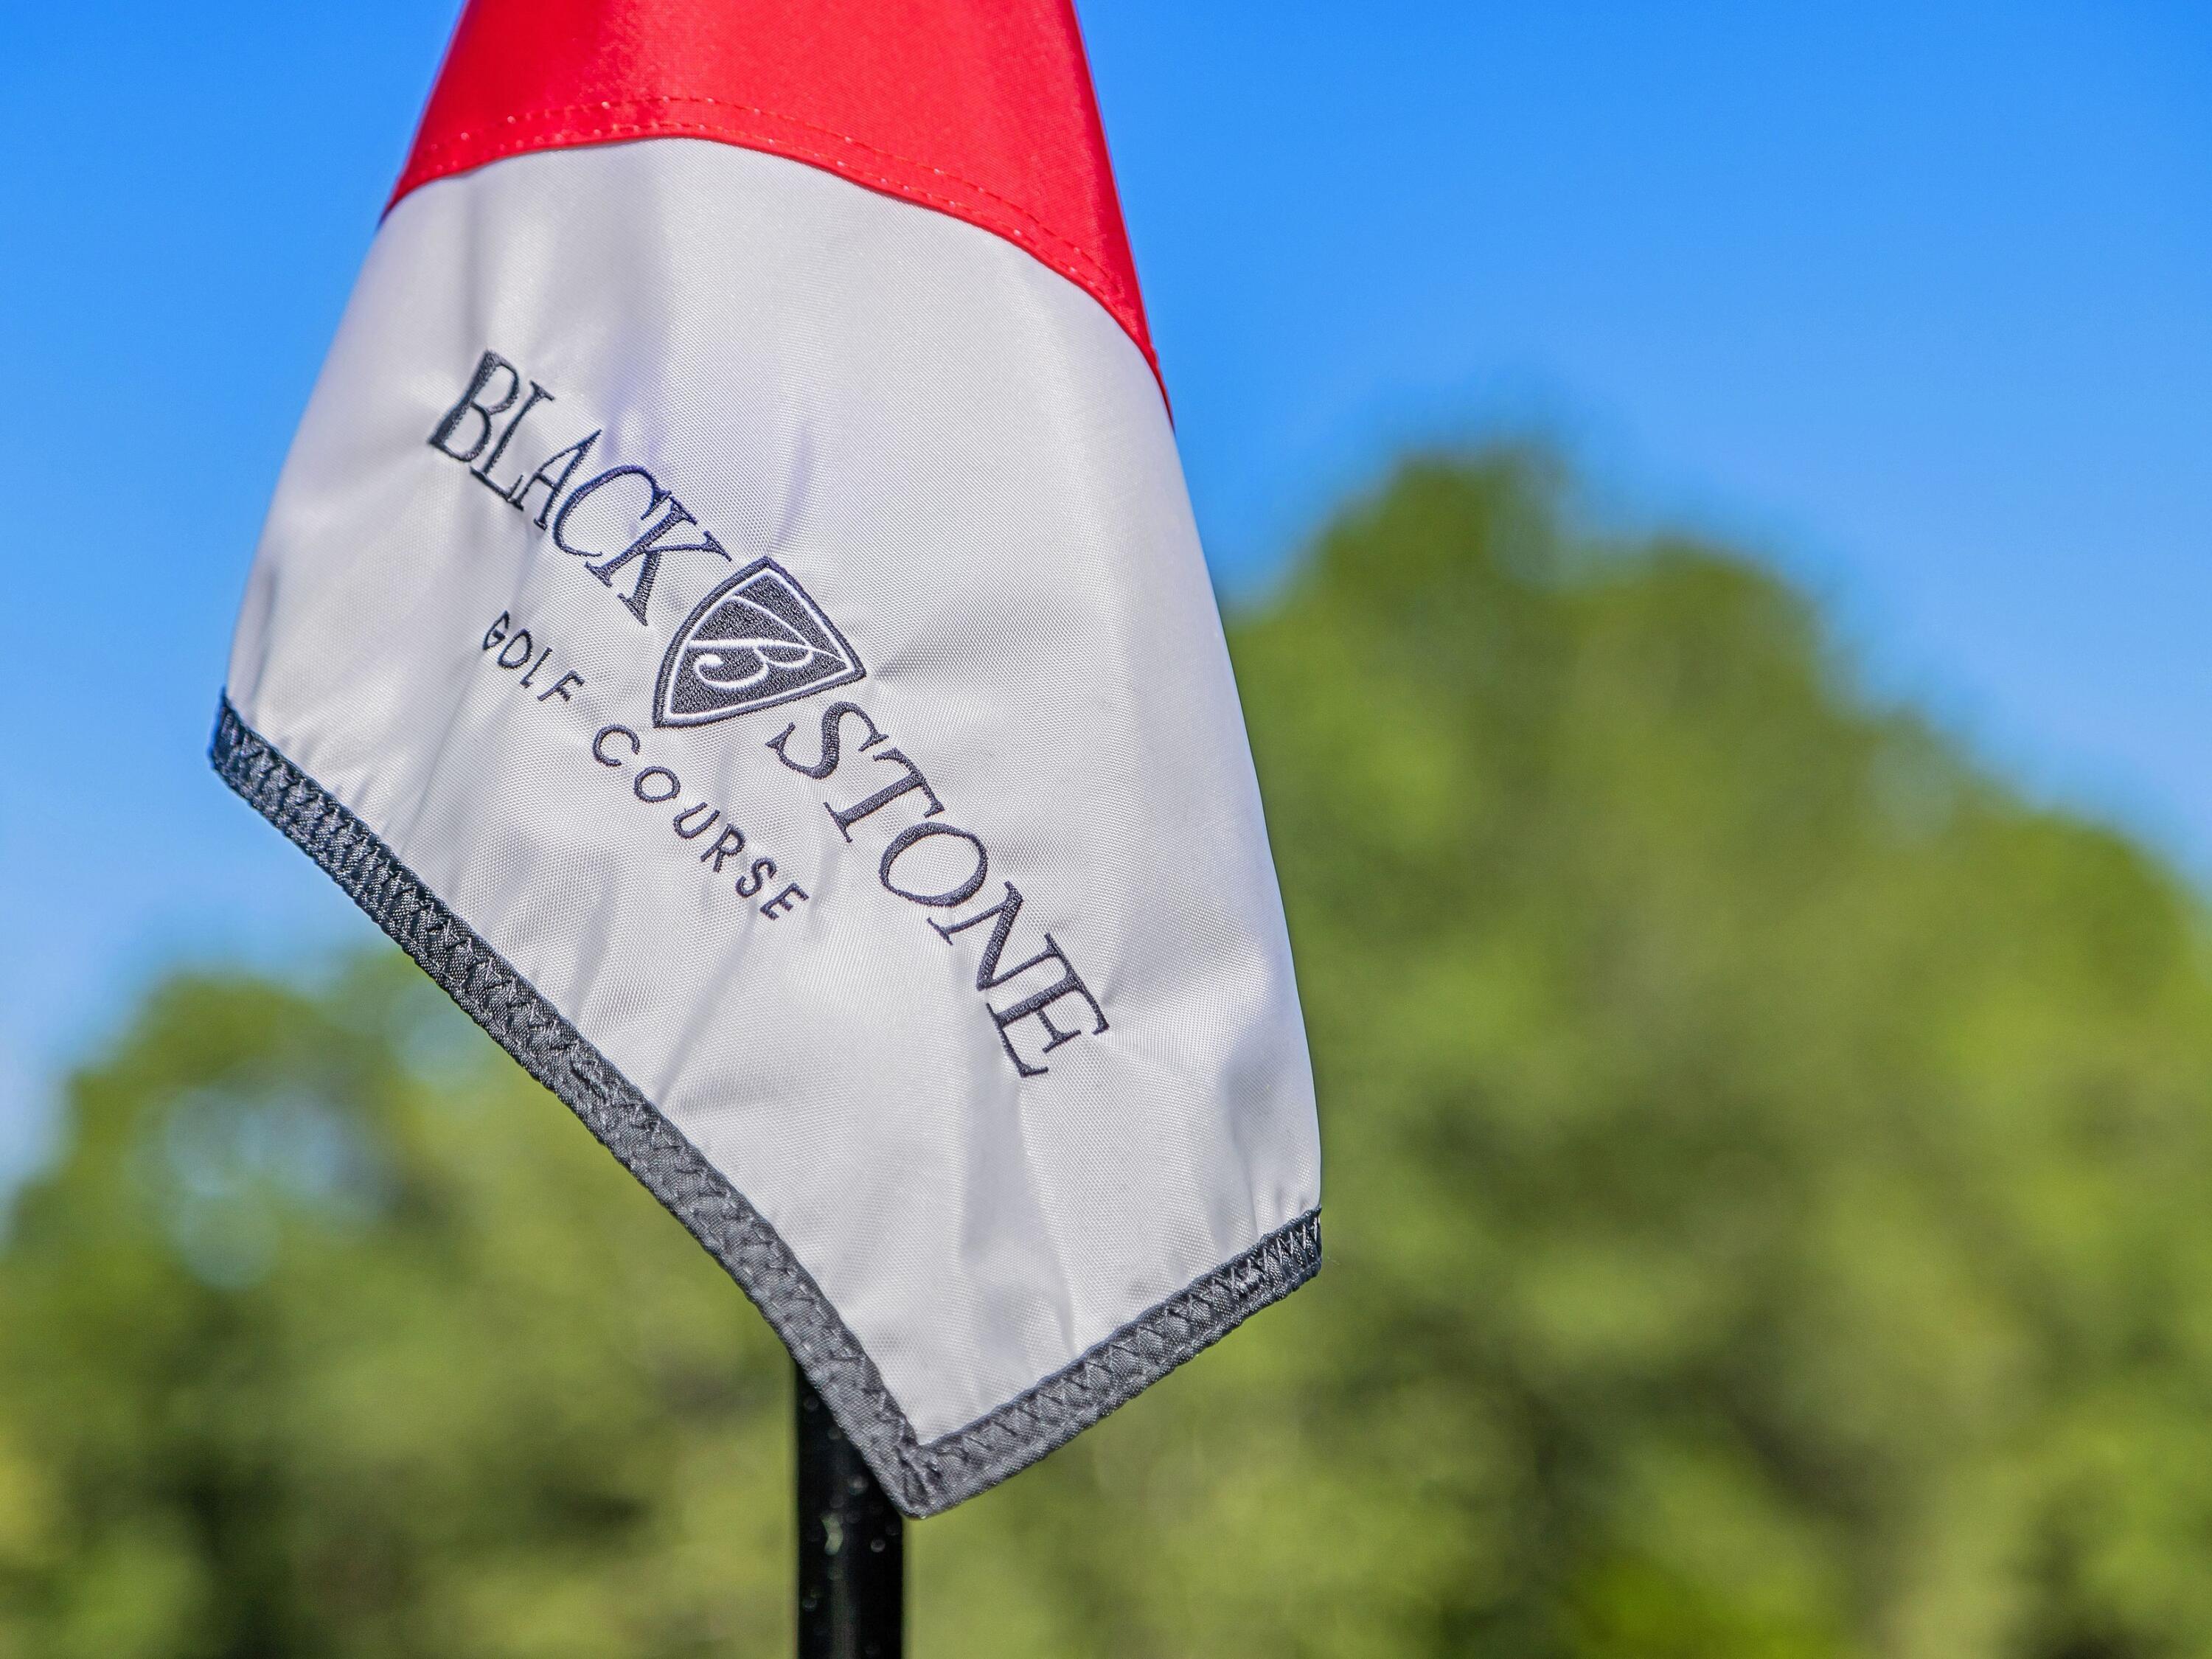 Blackstone Country Club: Black Stone, Courses